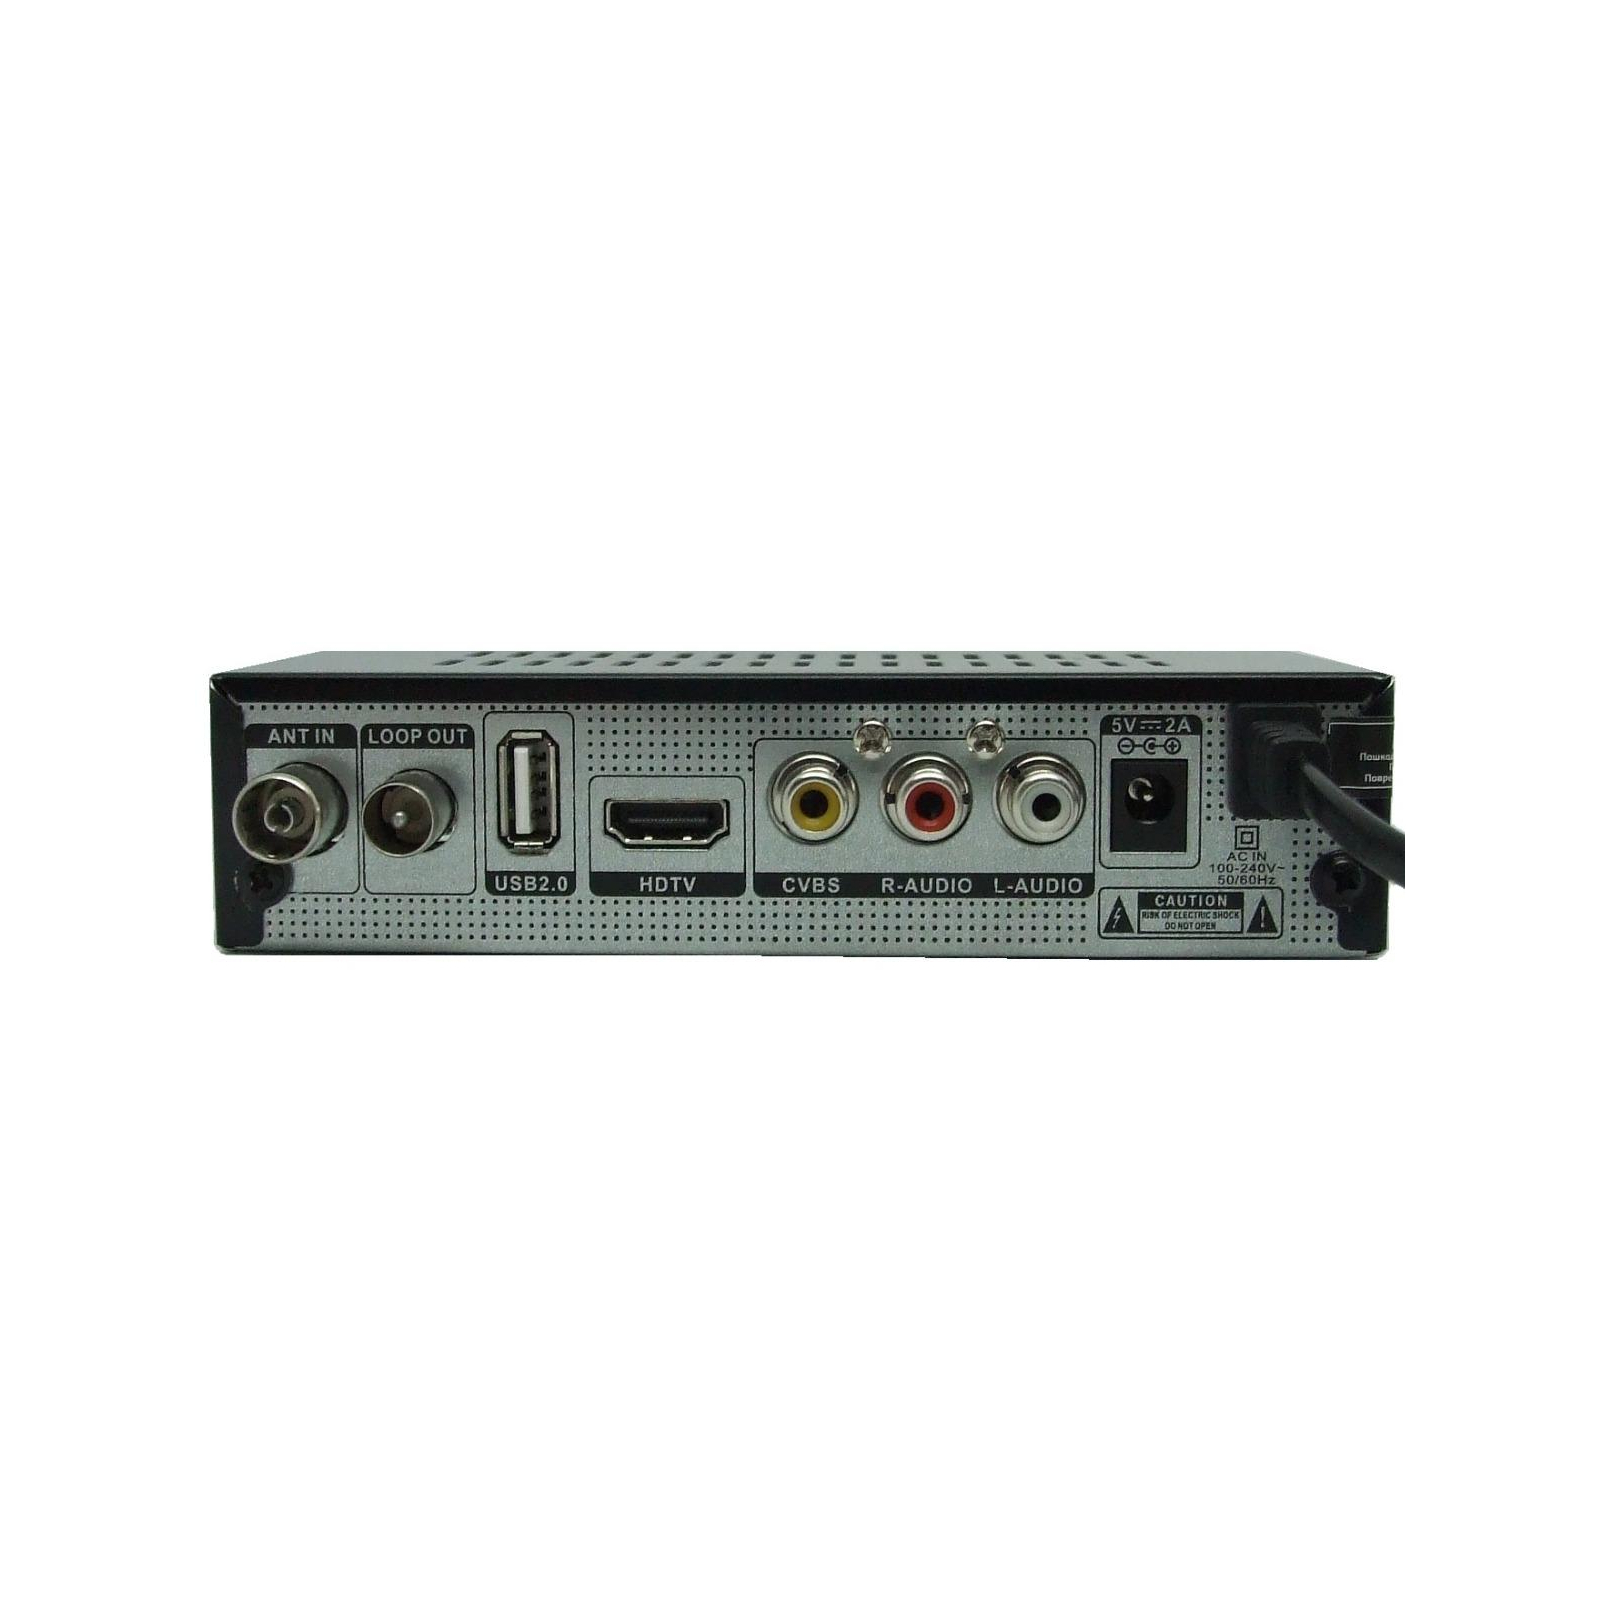 ТВ тюнер Astro DVB-T, DVB-T2, + USB-port (TA-24) изображение 2